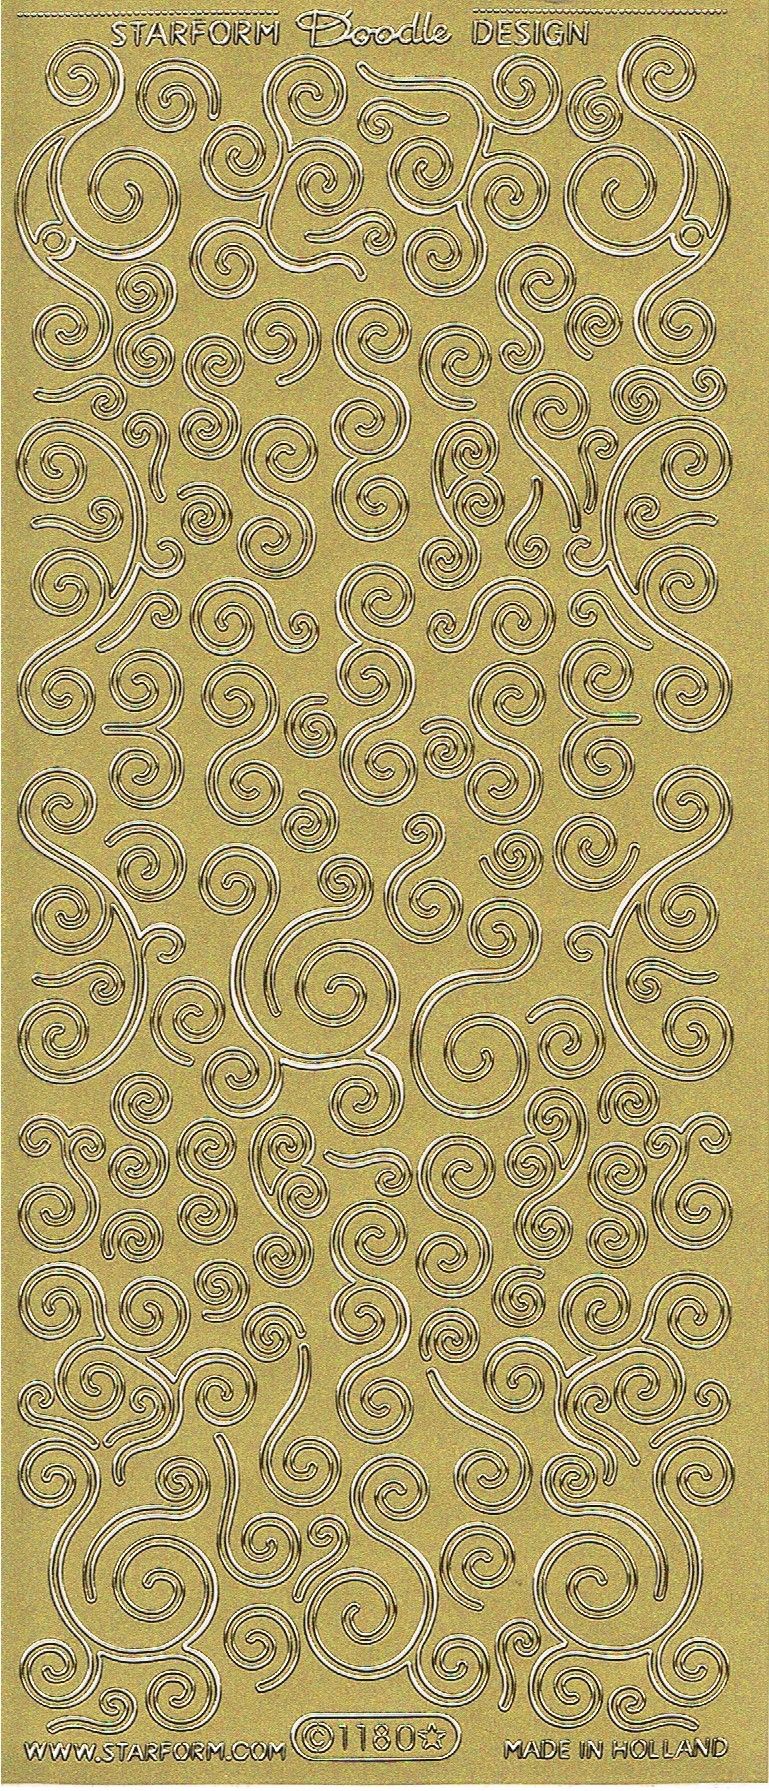 Decorative Swirls Starform Doodle Design 1180